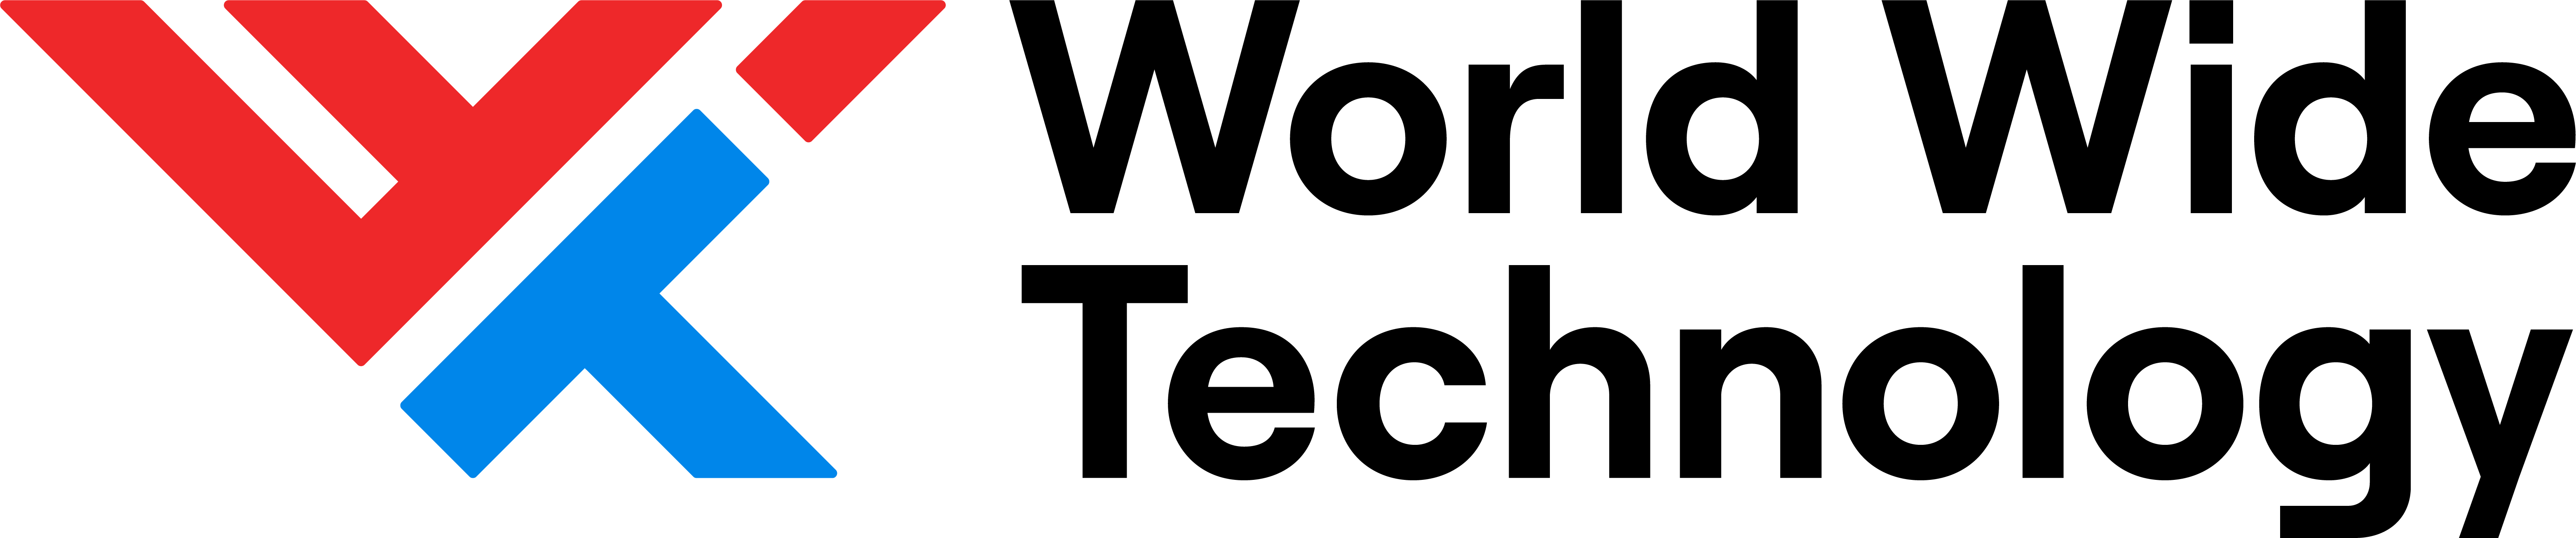 World Wide Technology, Inc. Logo